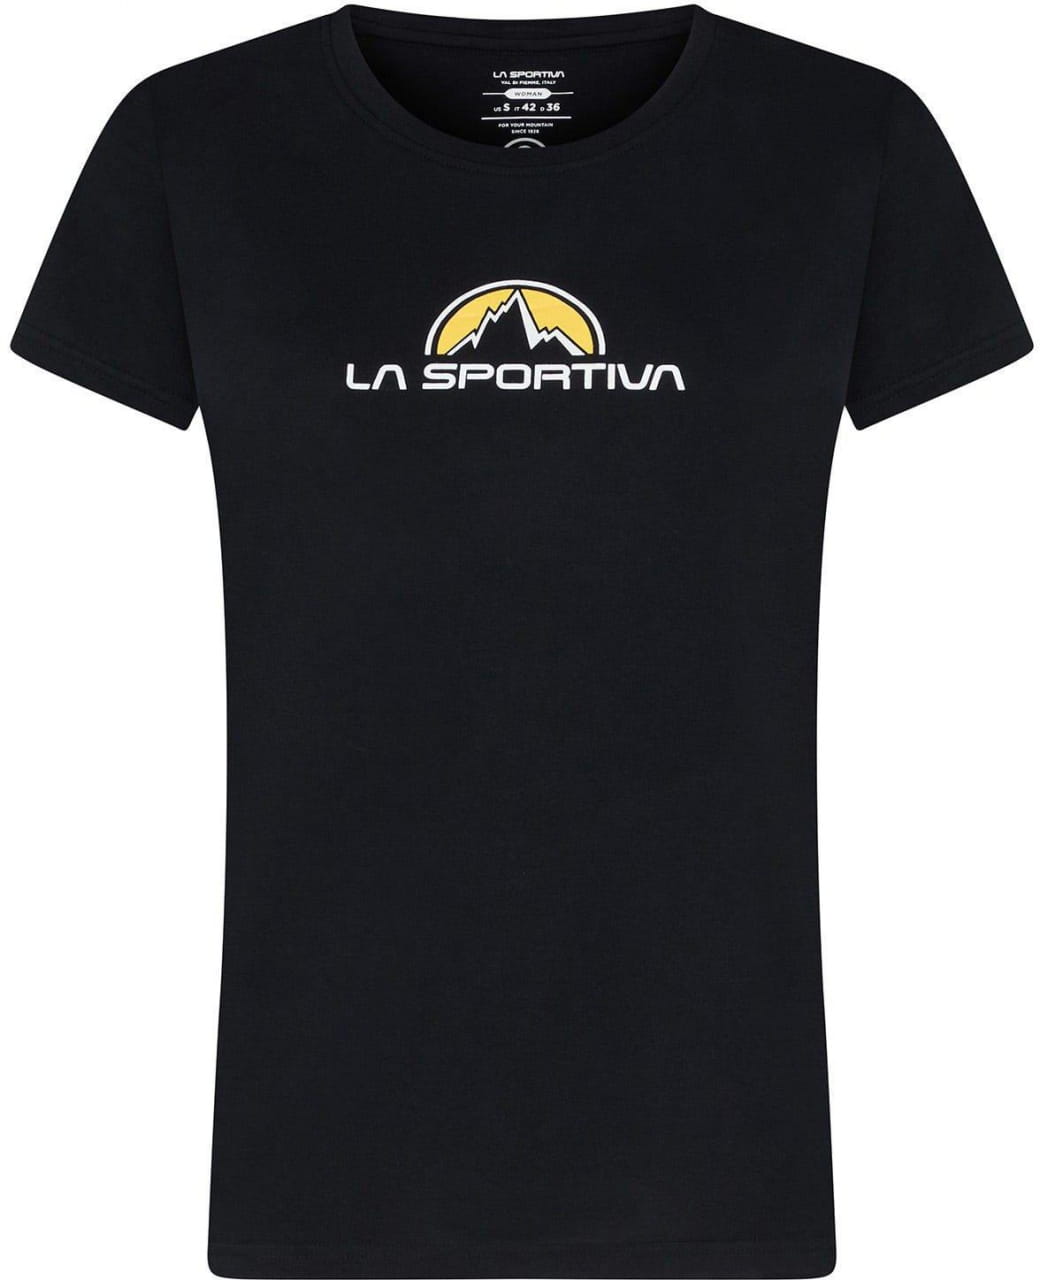 Dámske športové tričko La Sportiva Brand Tee W